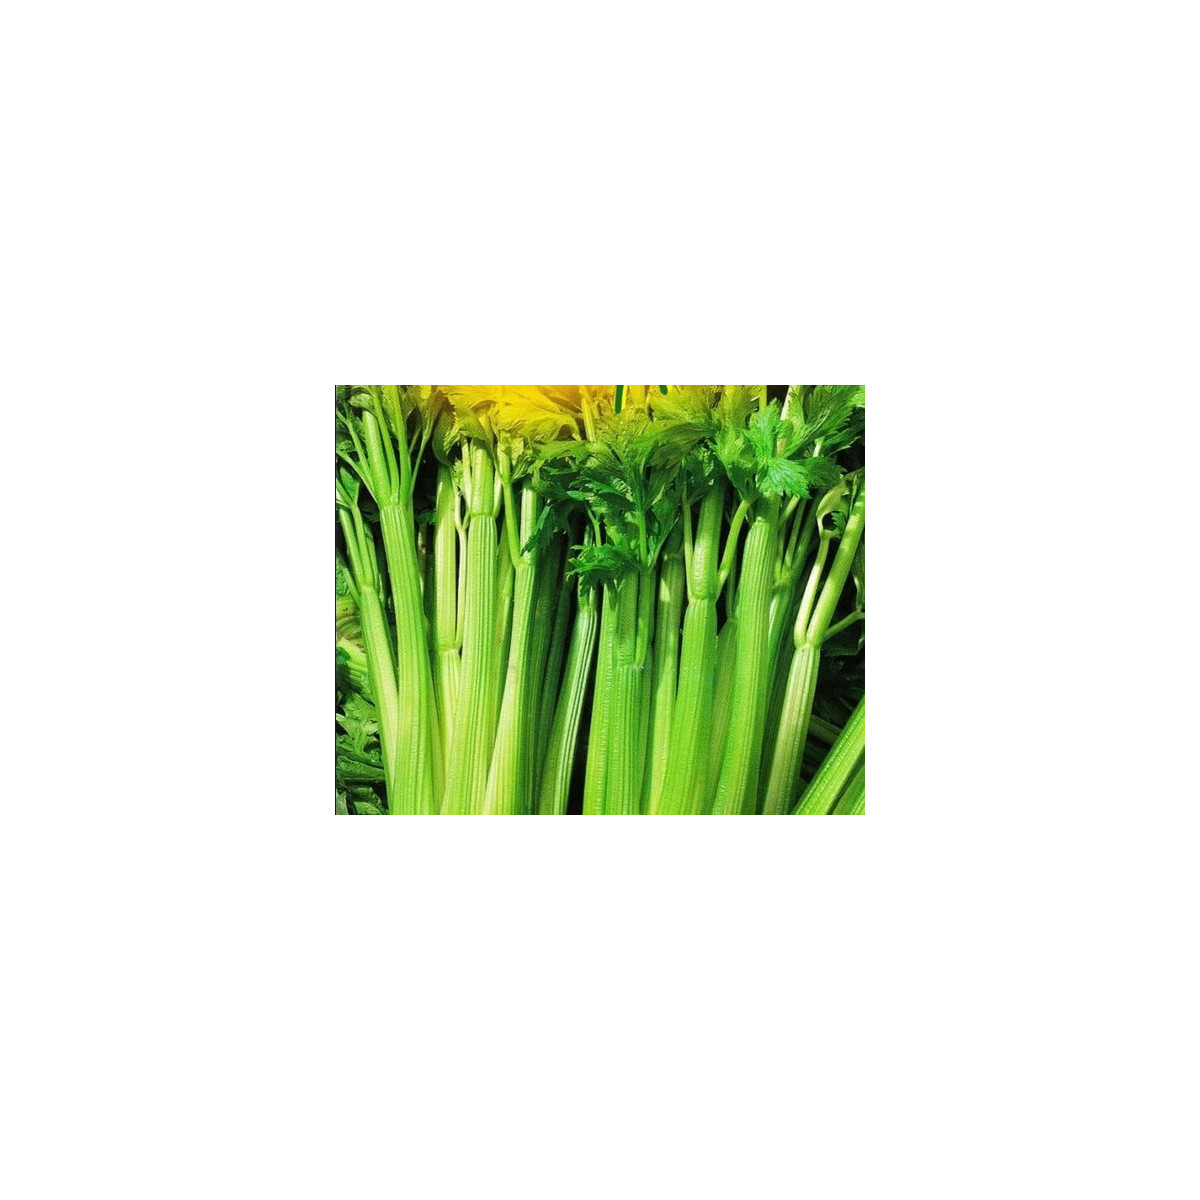 Celer řapíkatý - semena celeru- Apium graveolens - 1 gr